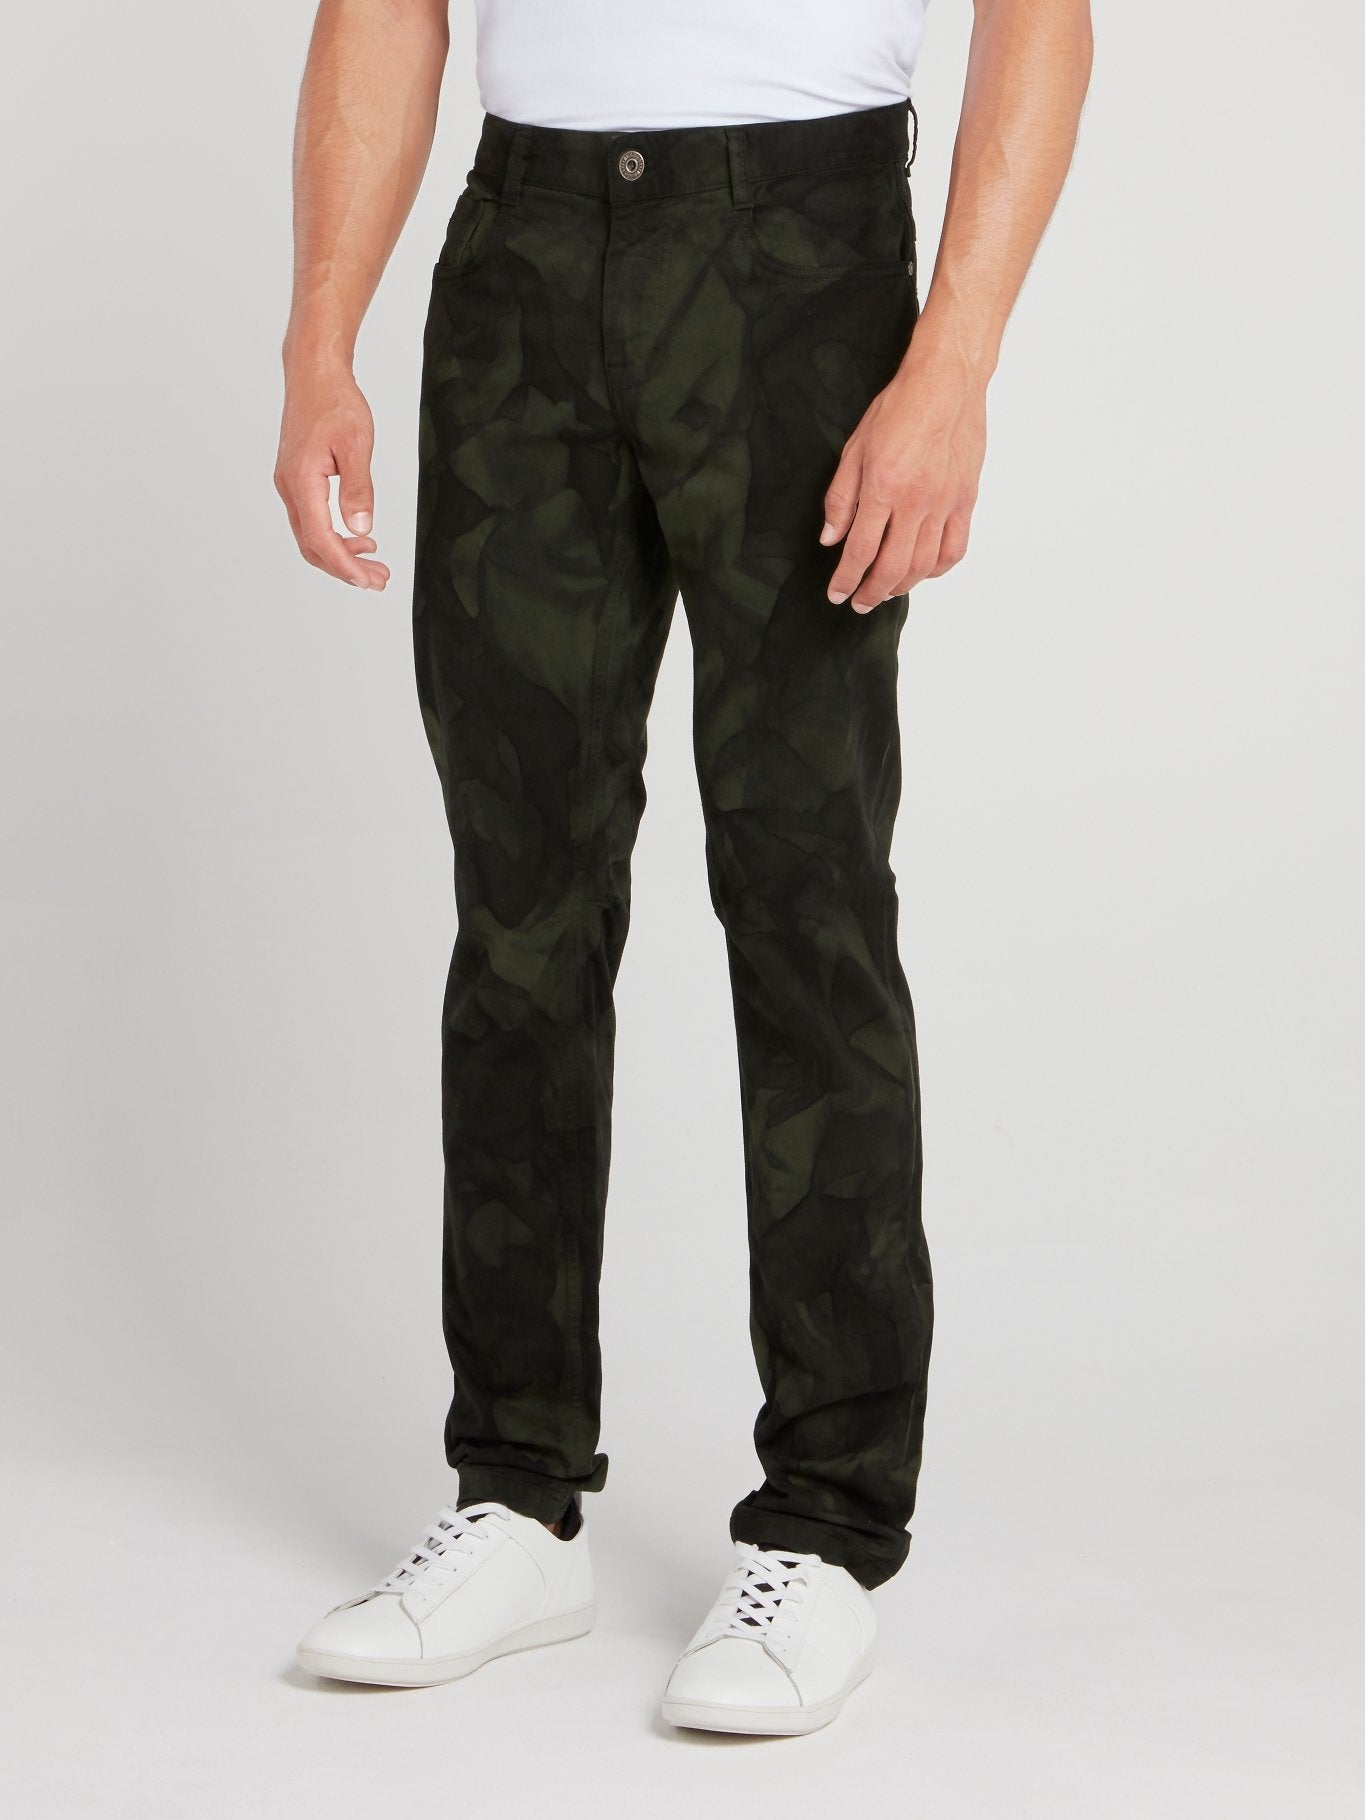 Green Crumple Print Pants